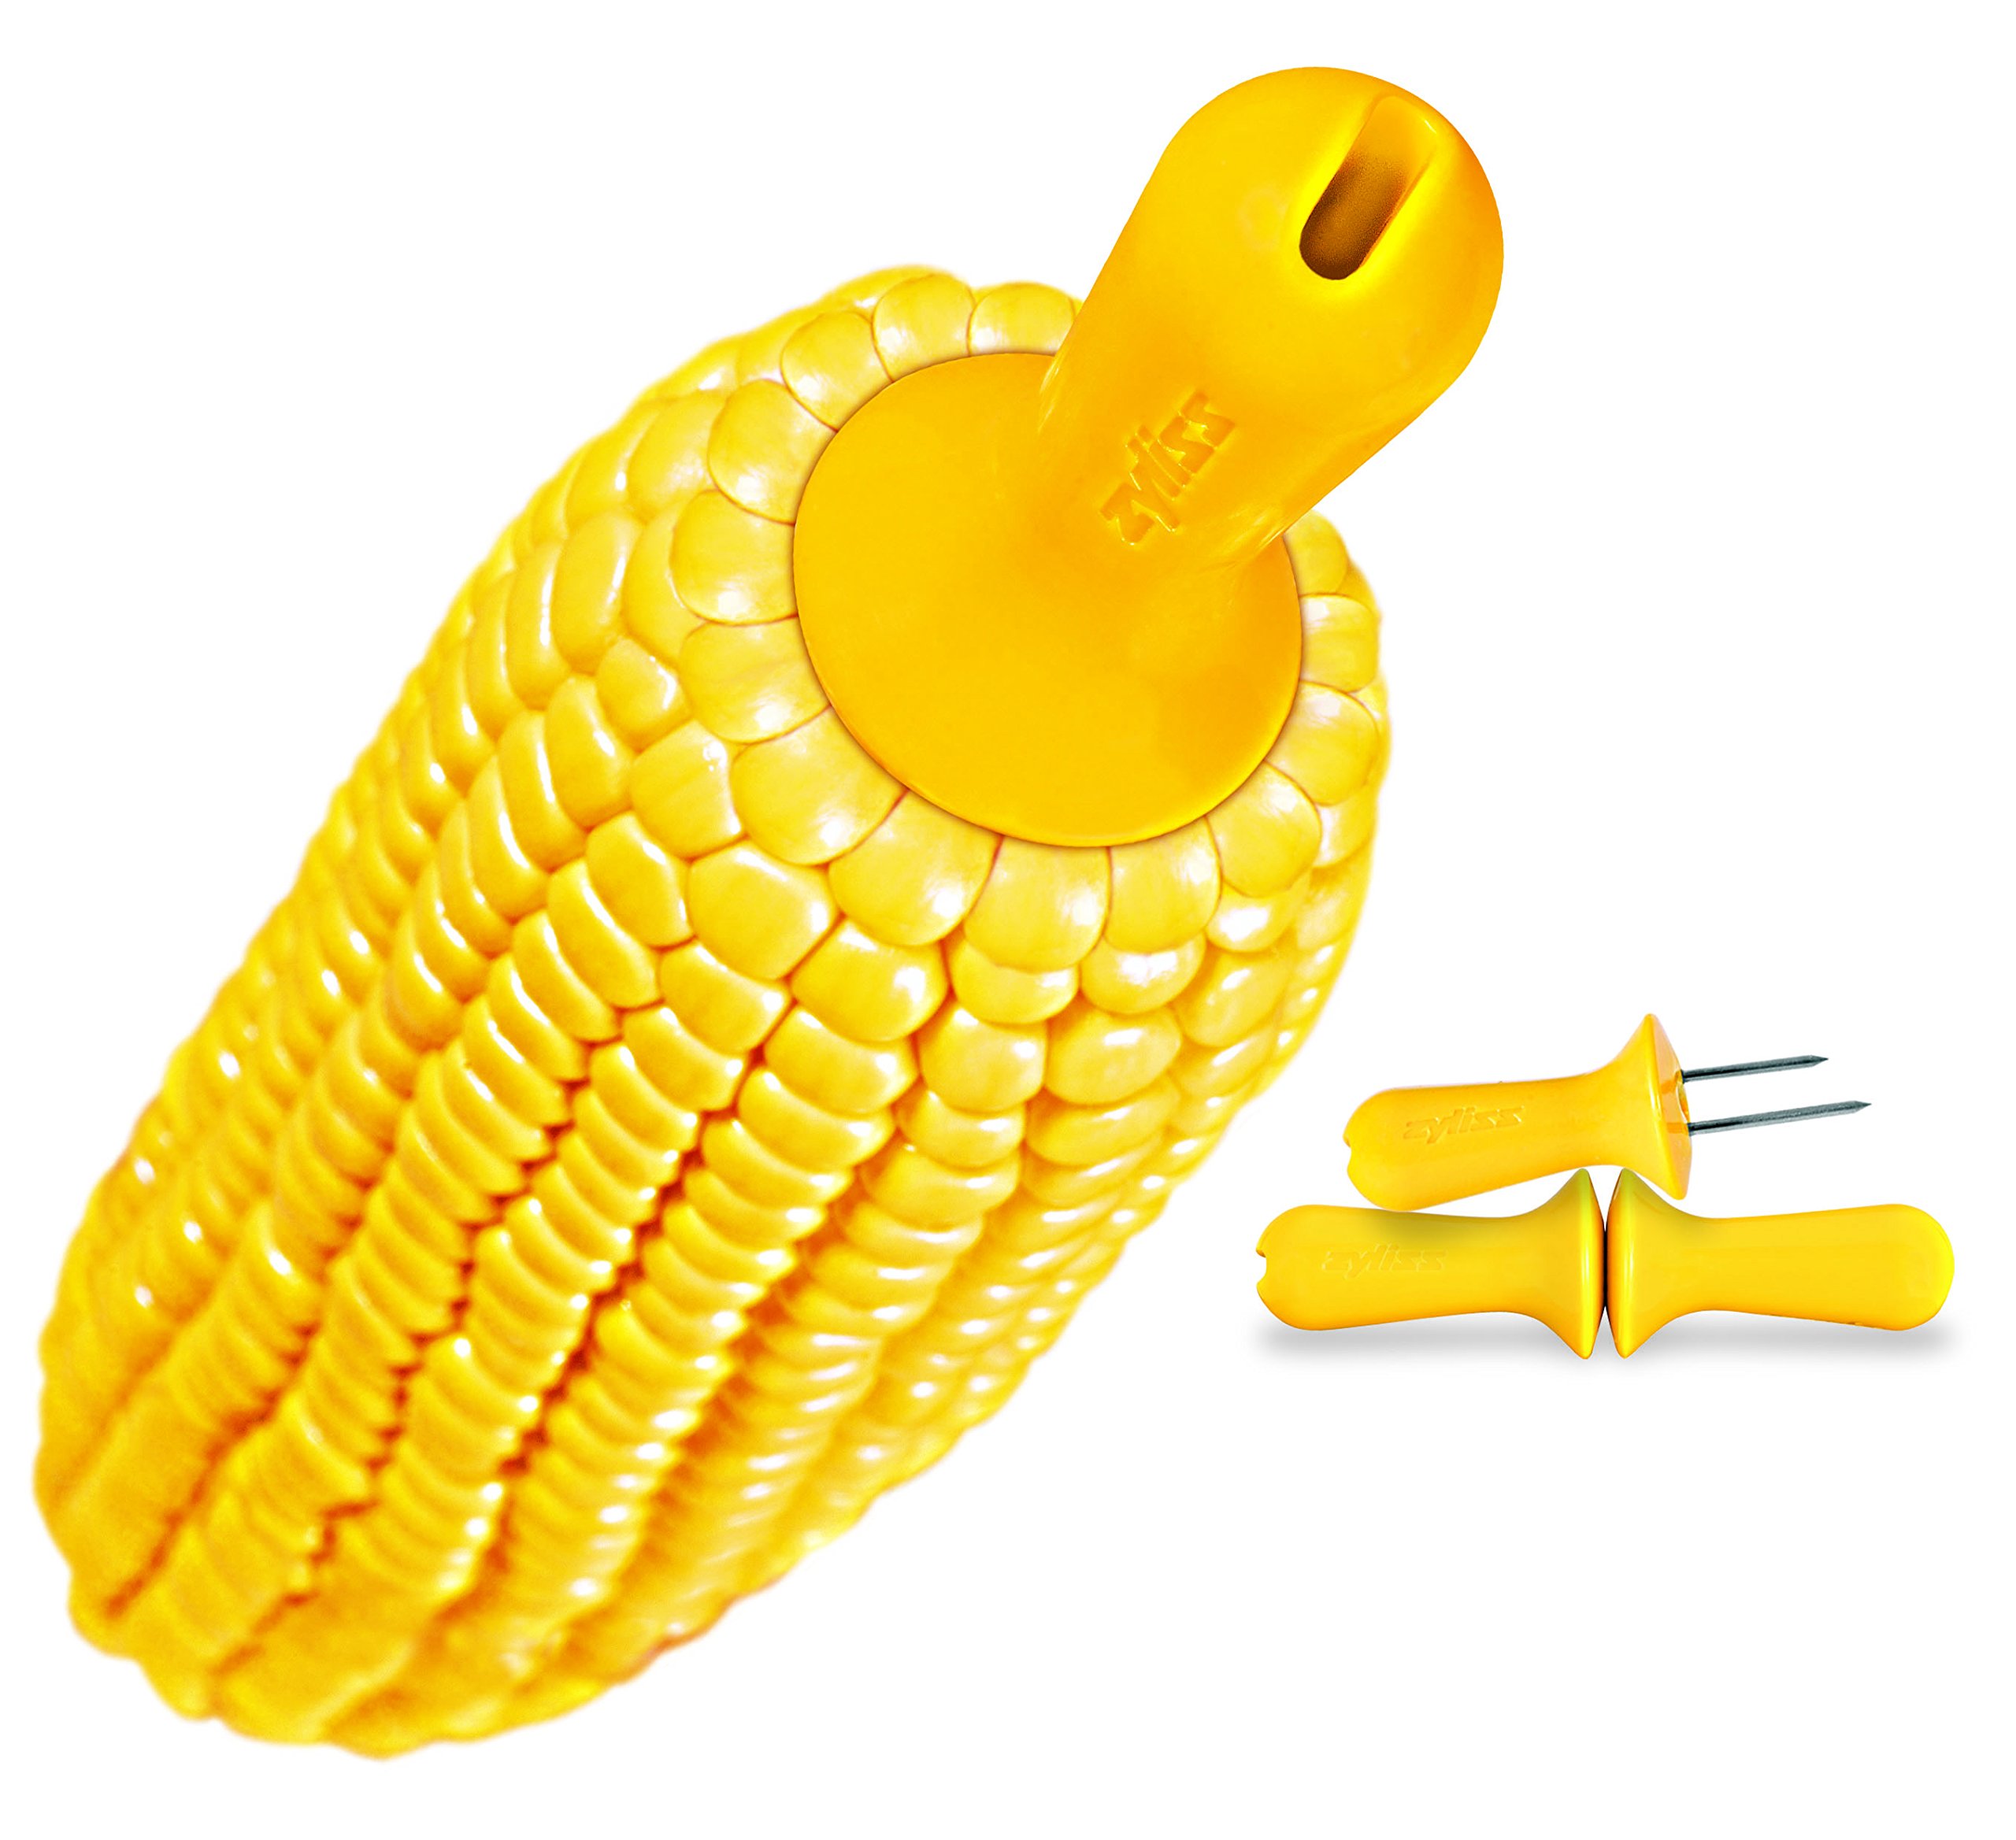 ZYLISS Corn Holders